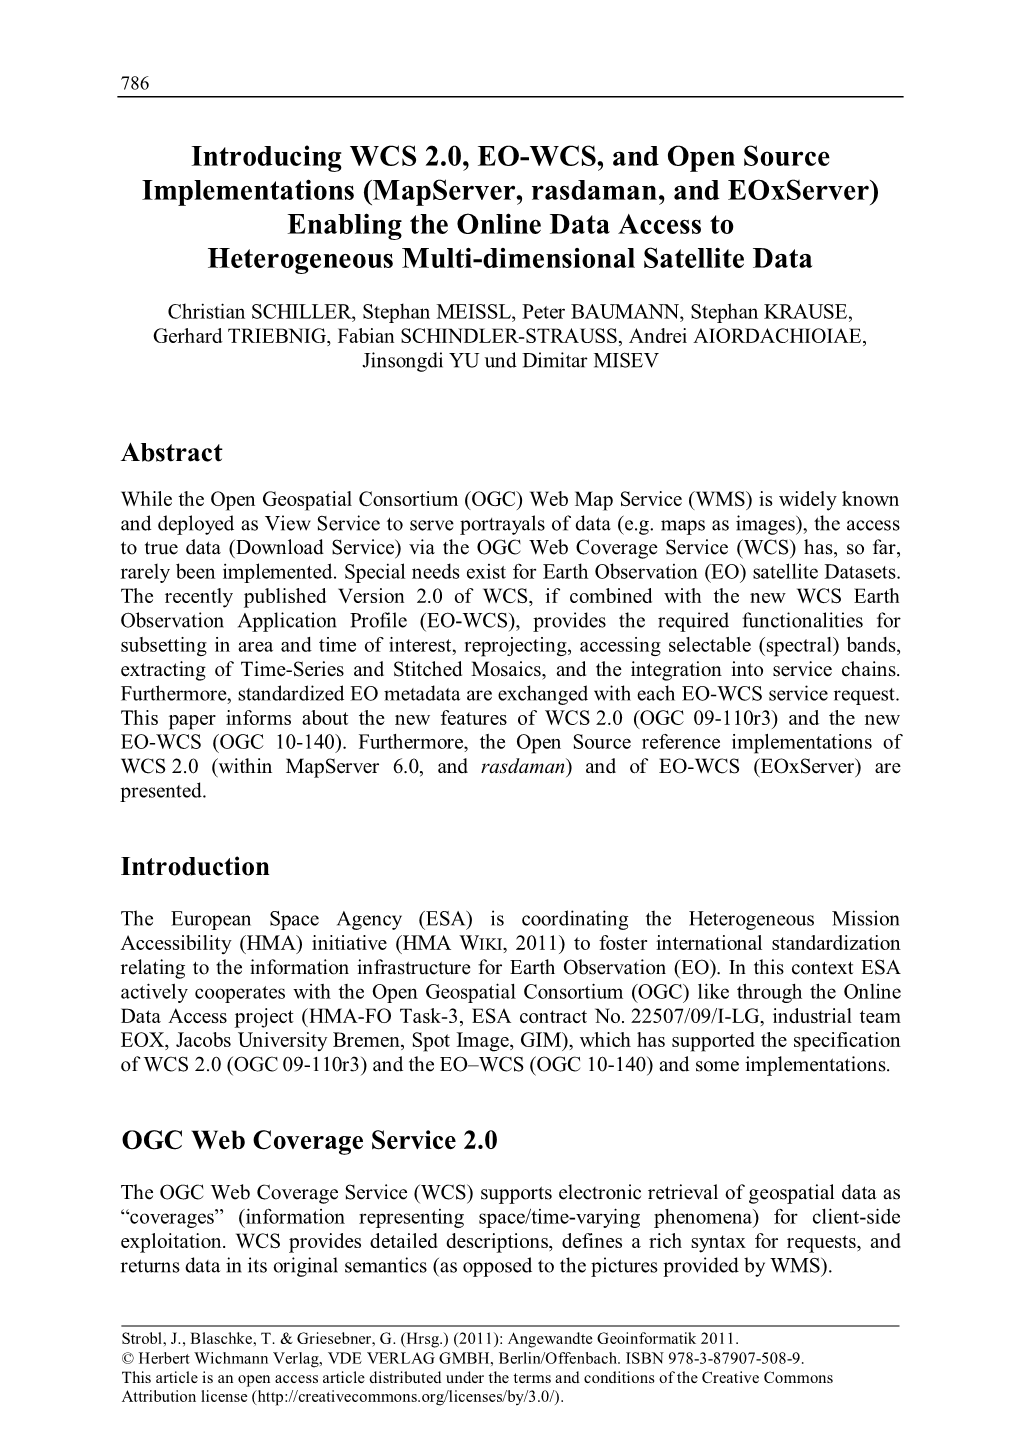 Mapserver, Rasdaman, and Eoxserver) Enabling the Online Data Access to Heterogeneous Multi-Dimensional Satellite Data